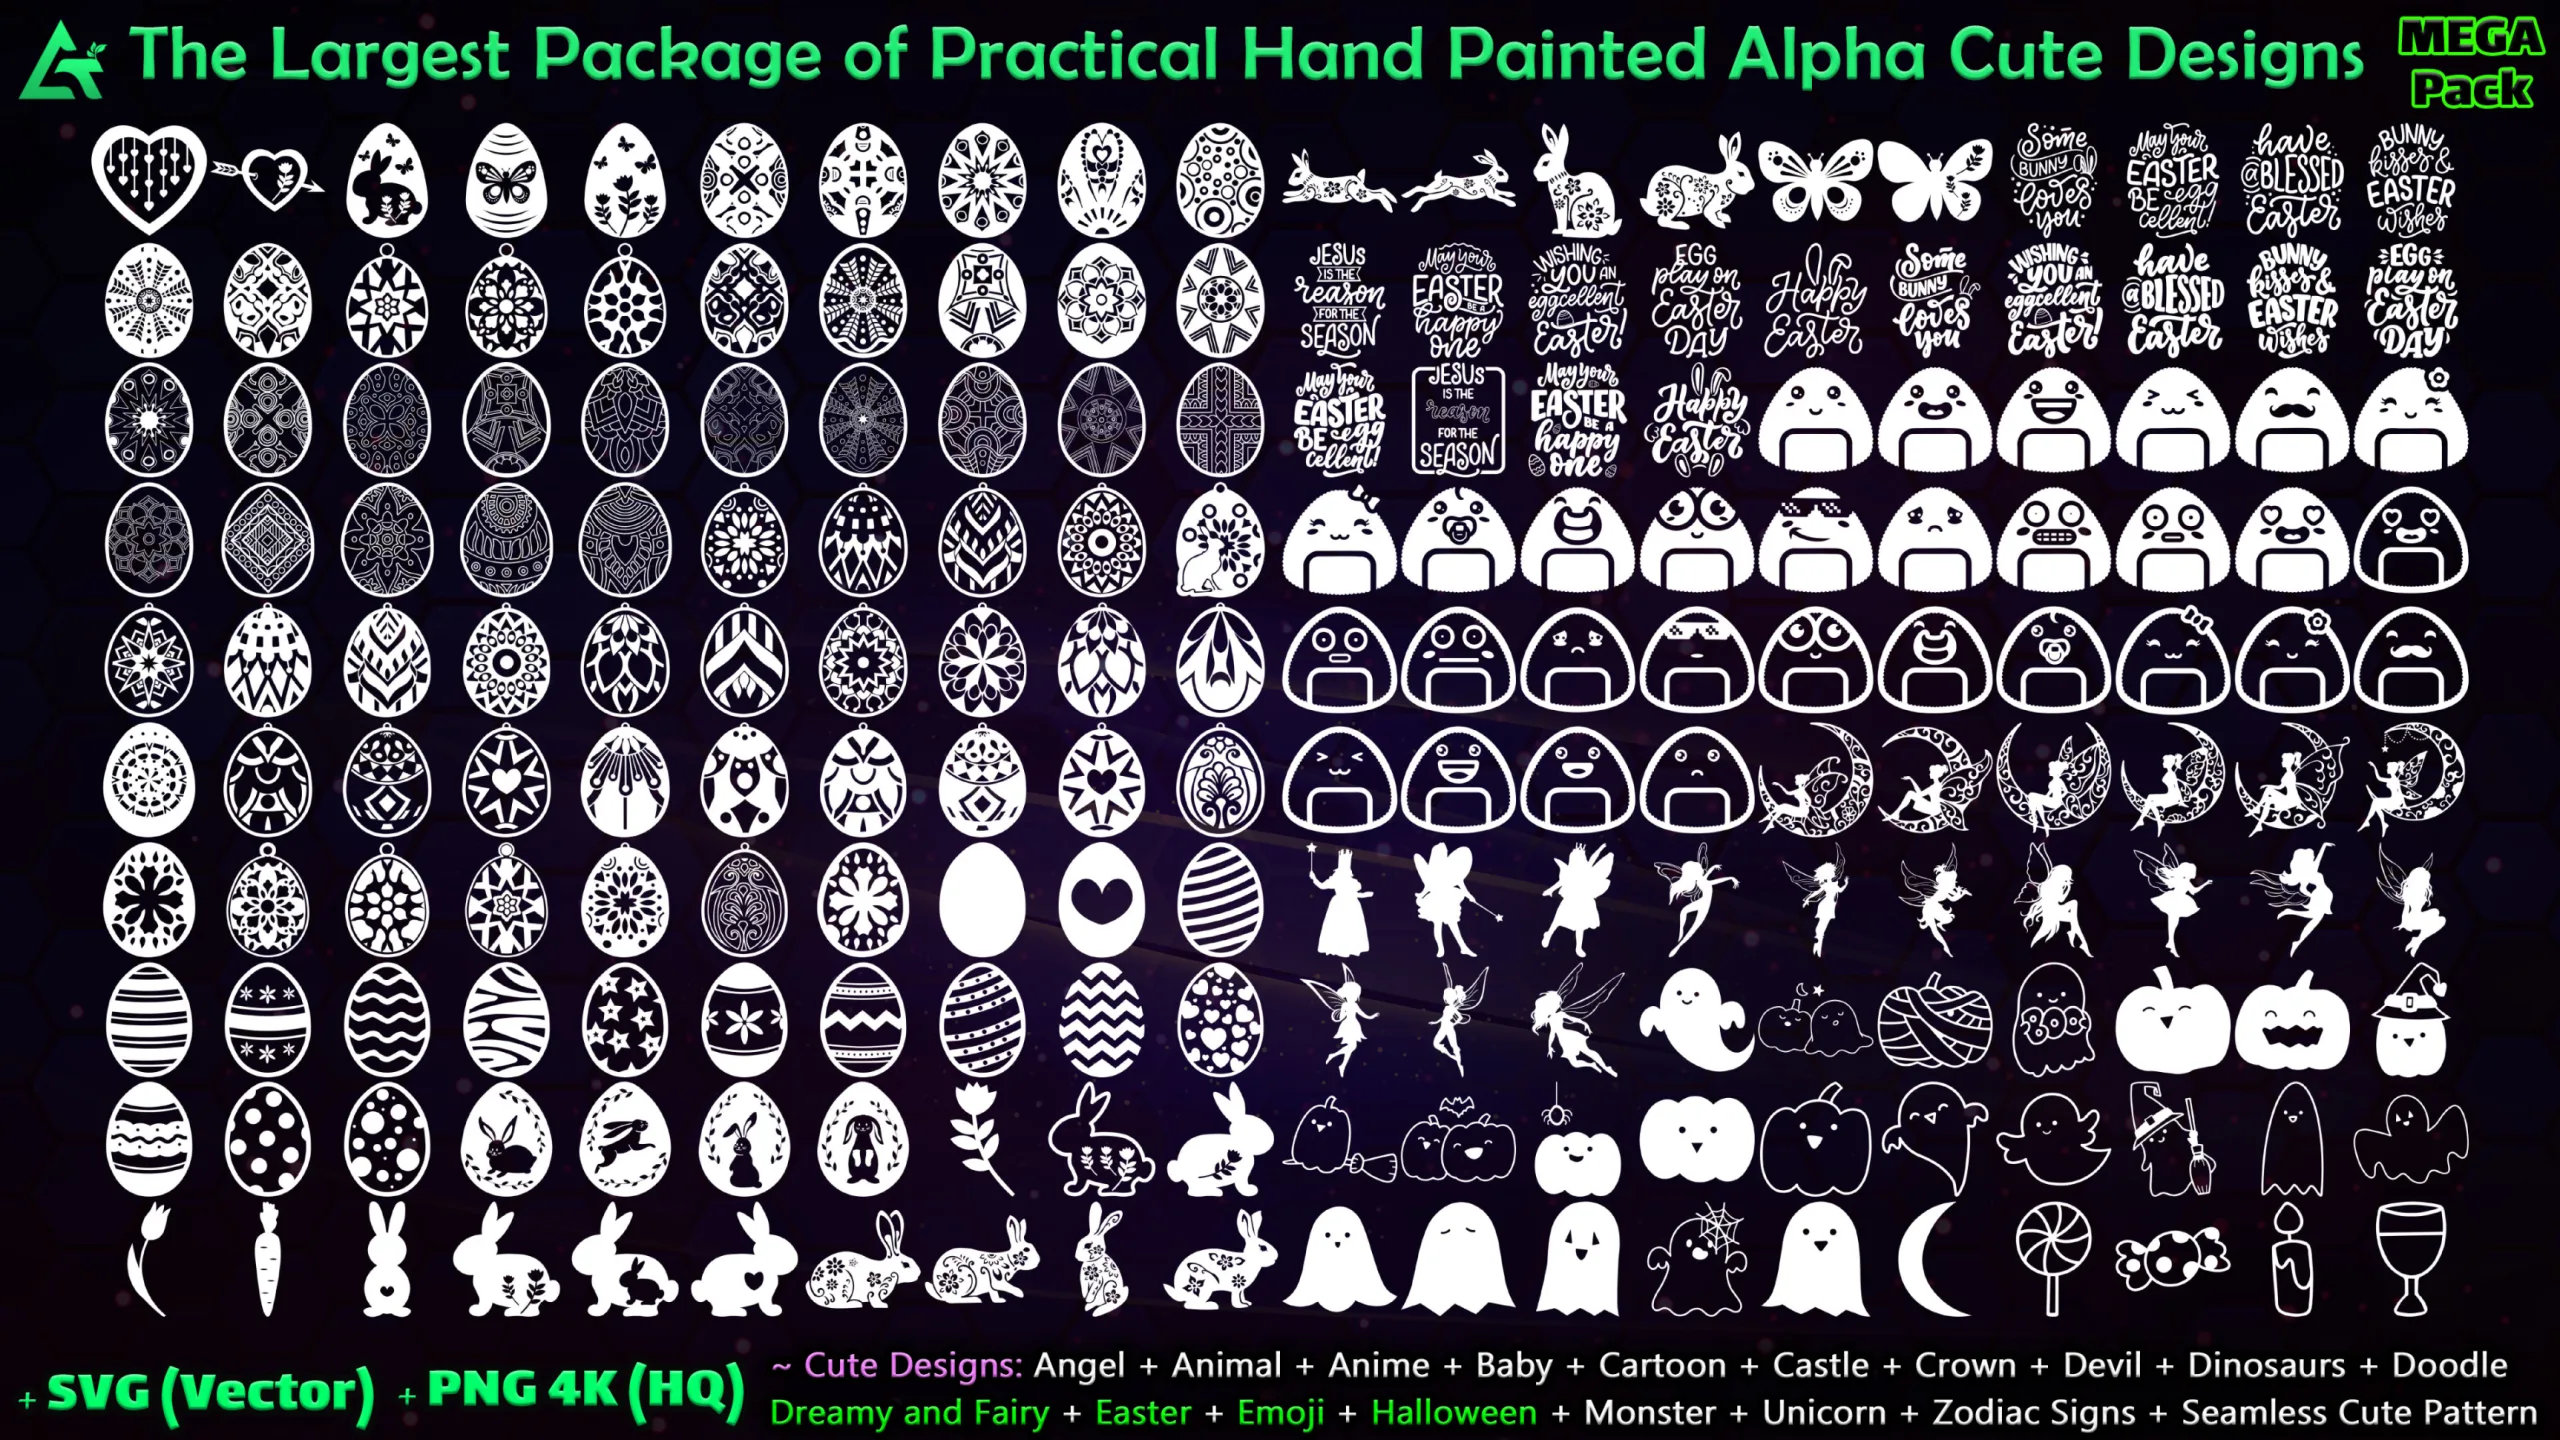 2230 Hand Painted Alpha Cute Designs (MEGA Pack) - Vol 23